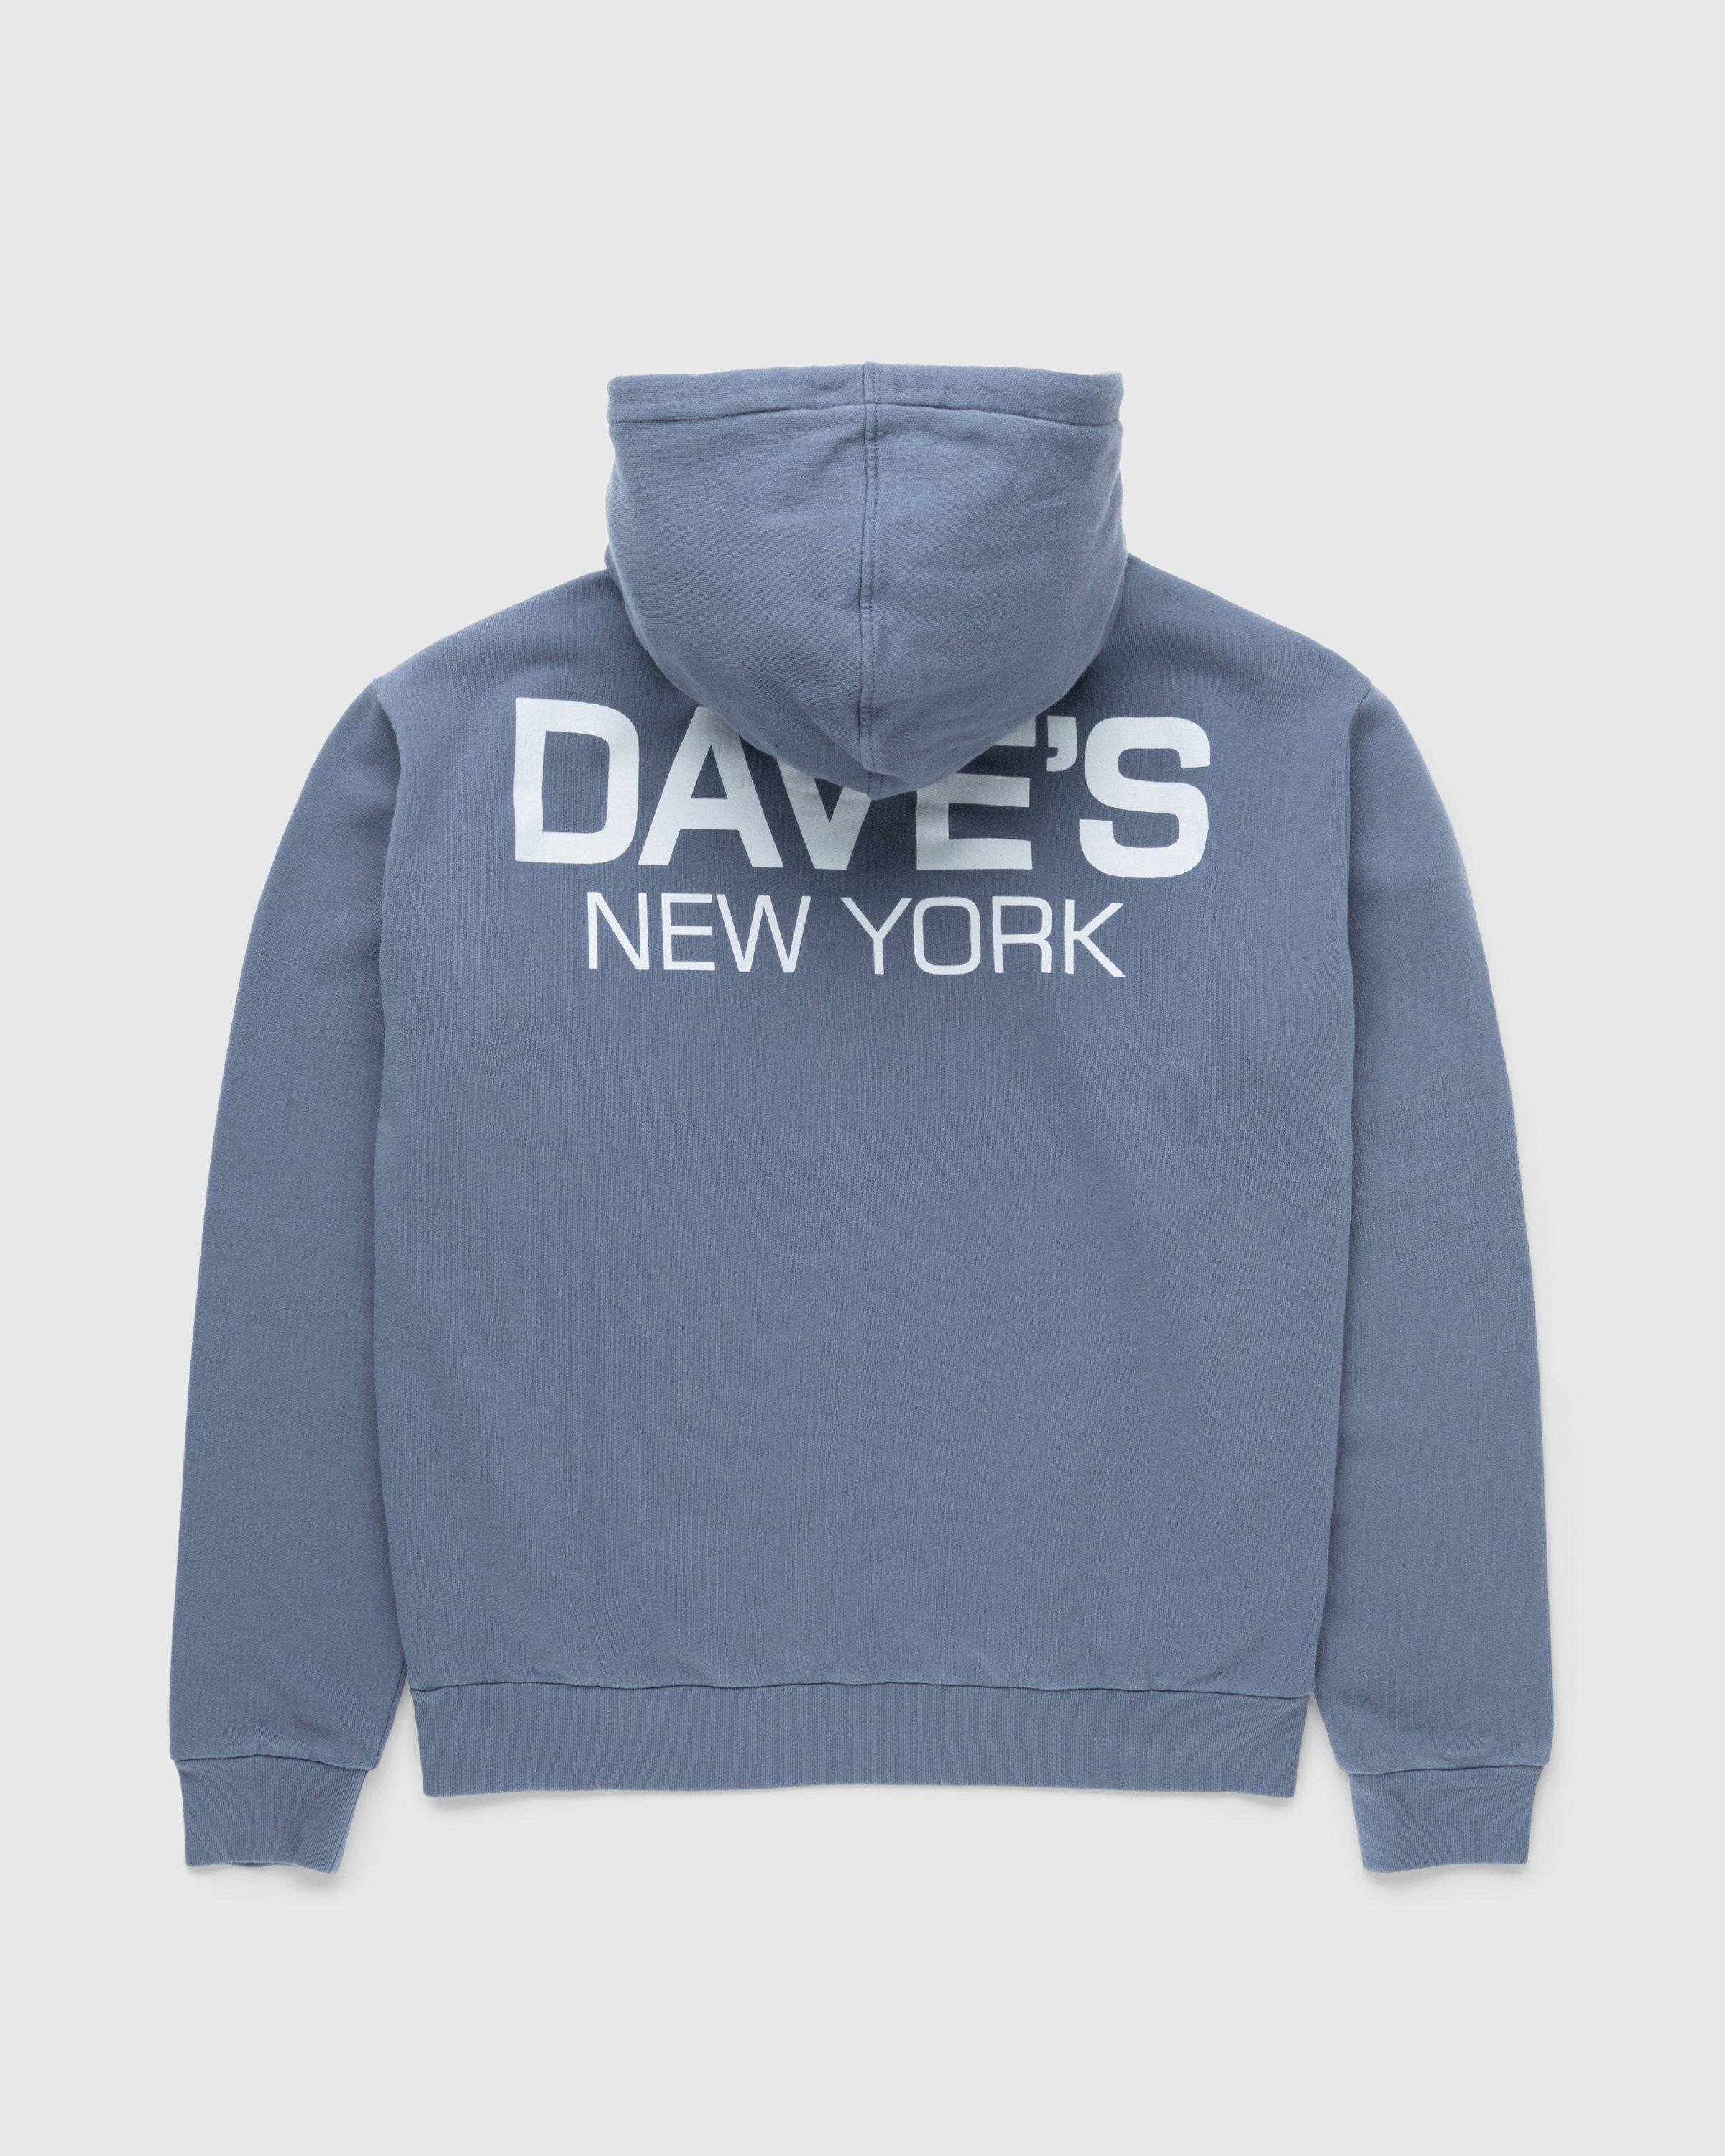 Dave's New York x HighsnobietyHoodie Gray by HIGHSNOBIETY